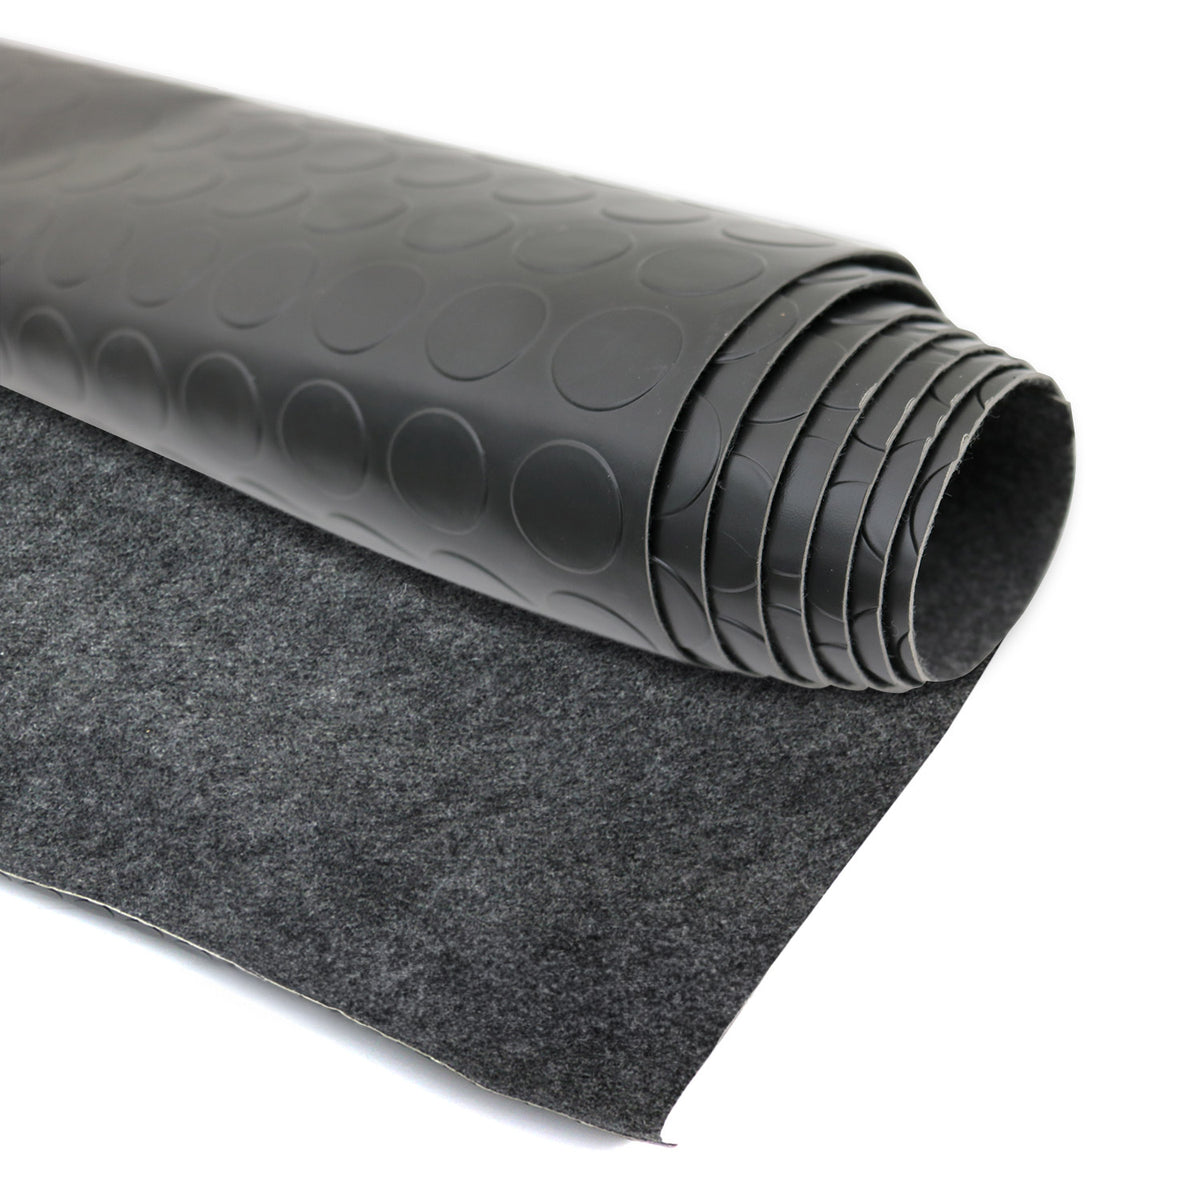 Anti-slip mat floor covering doormat checker plate look 100 x 200 cm black